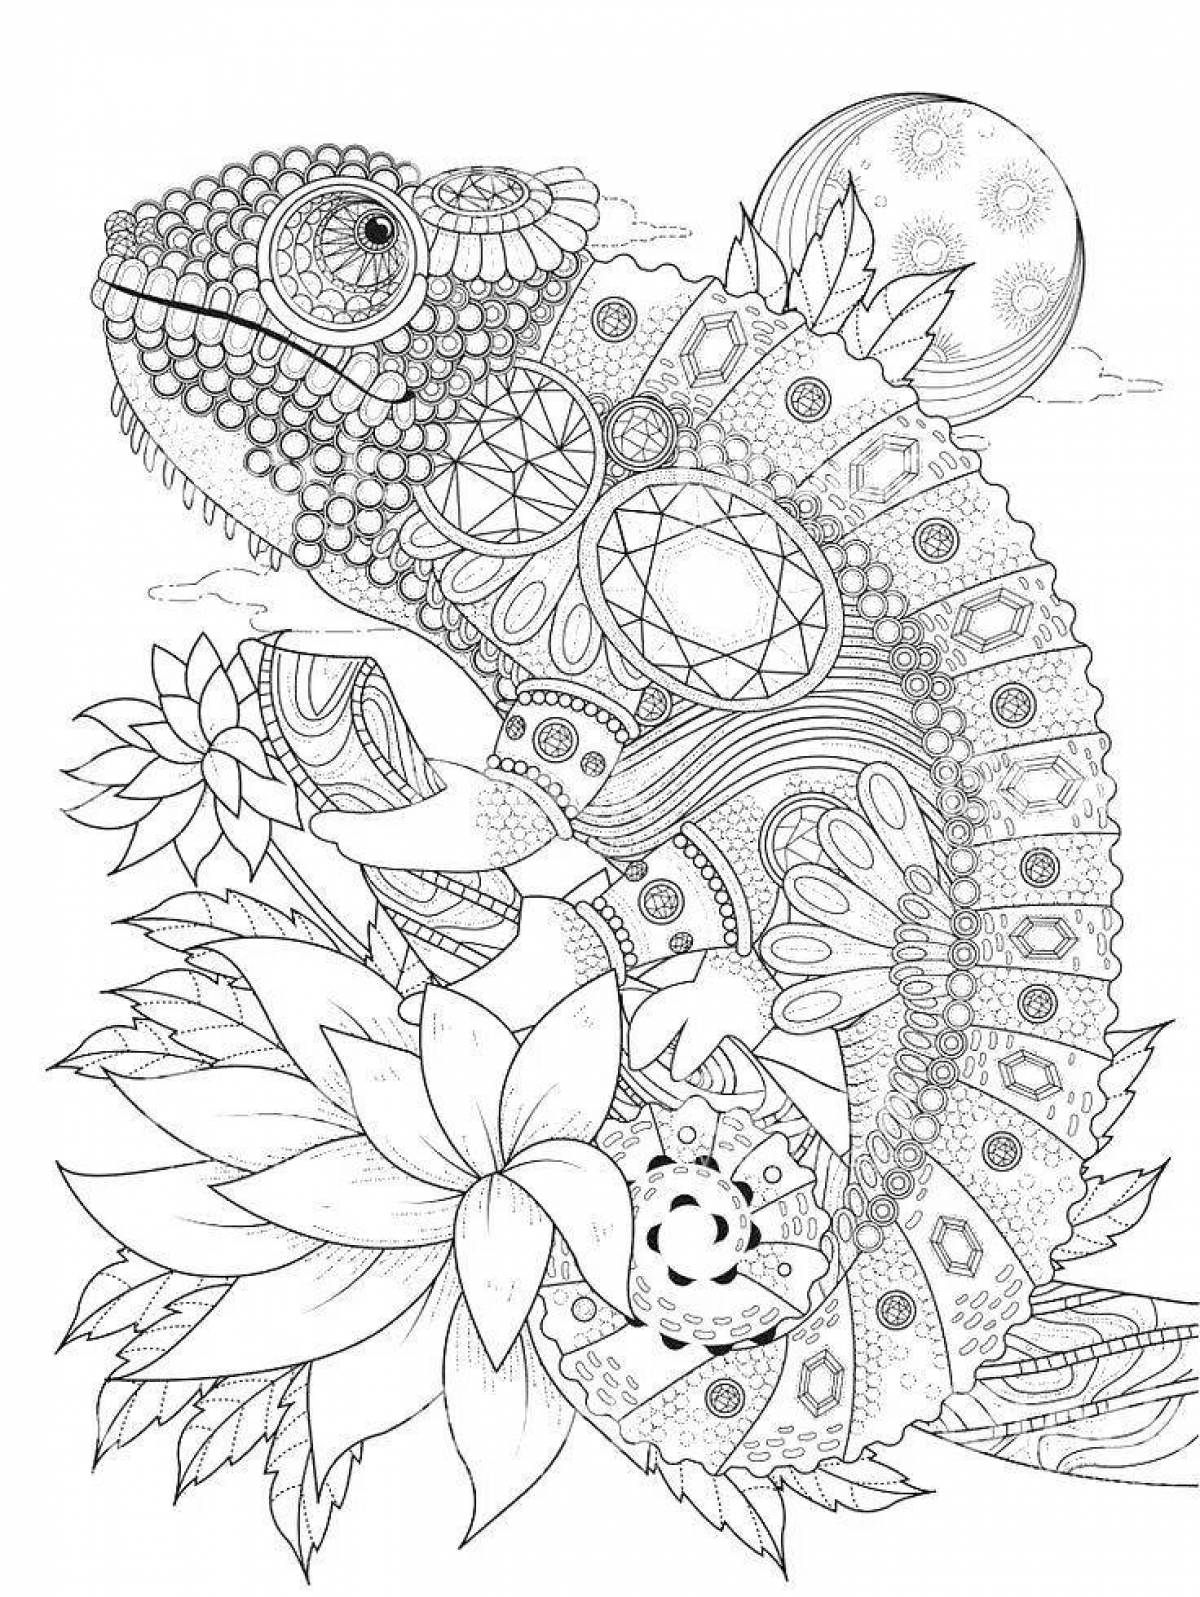 Chameleon anti-stress inspirational coloring book